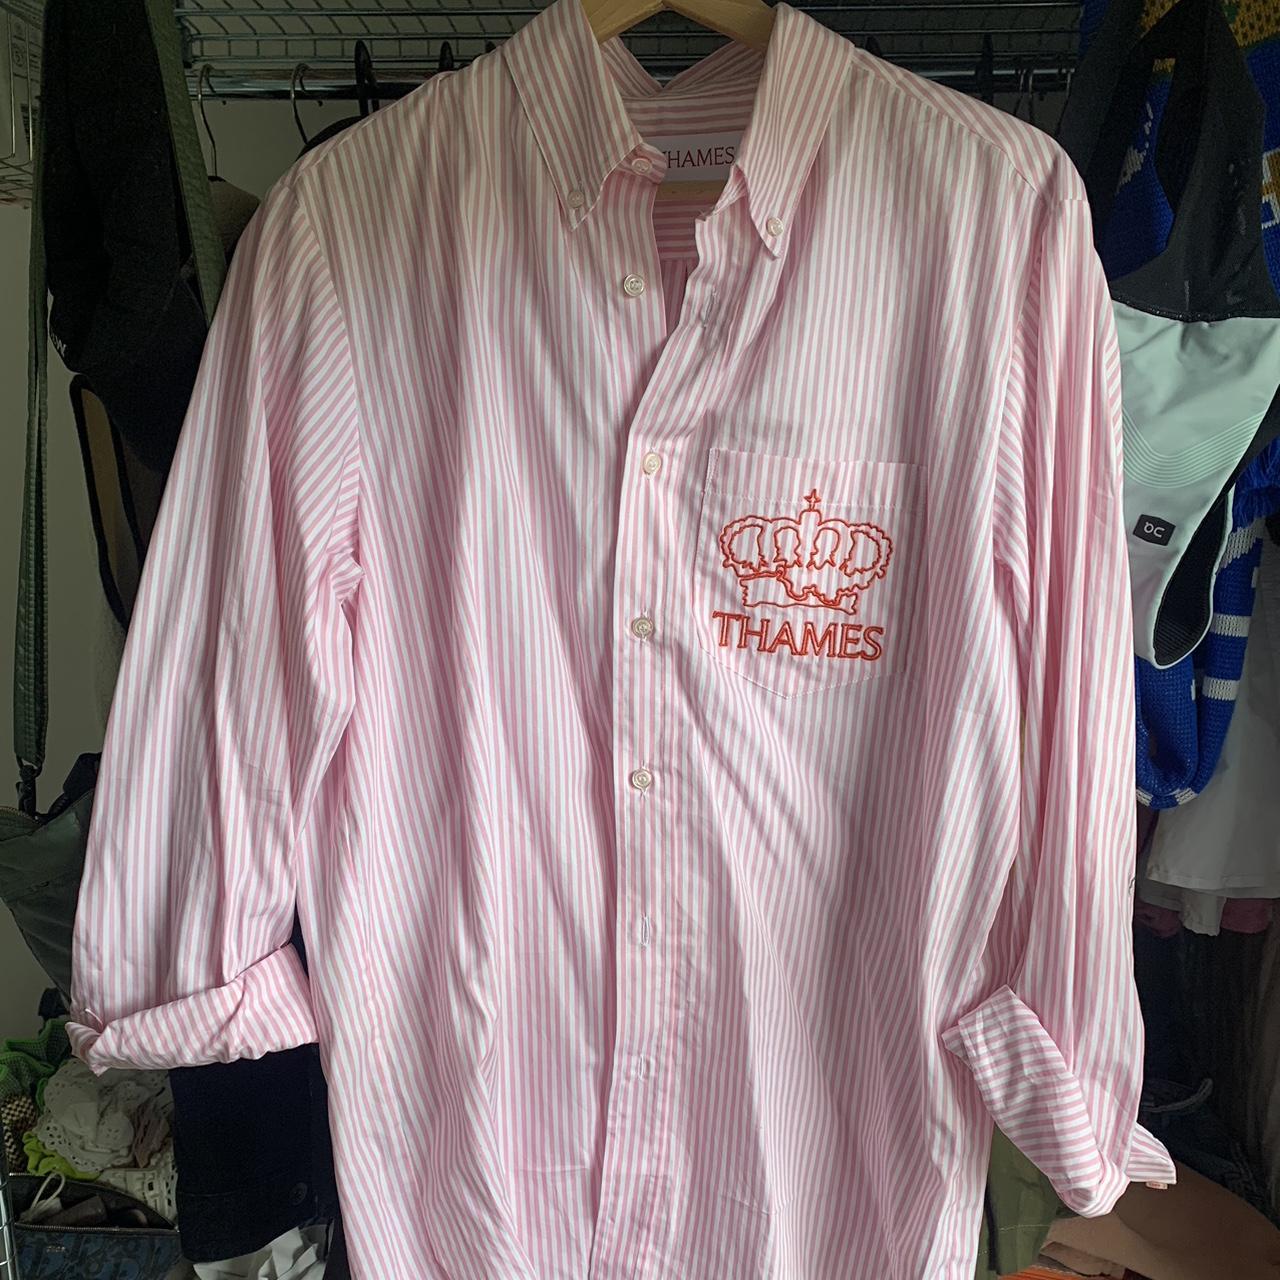 THAMES MMXX marco PG pink white stripe shirt worn